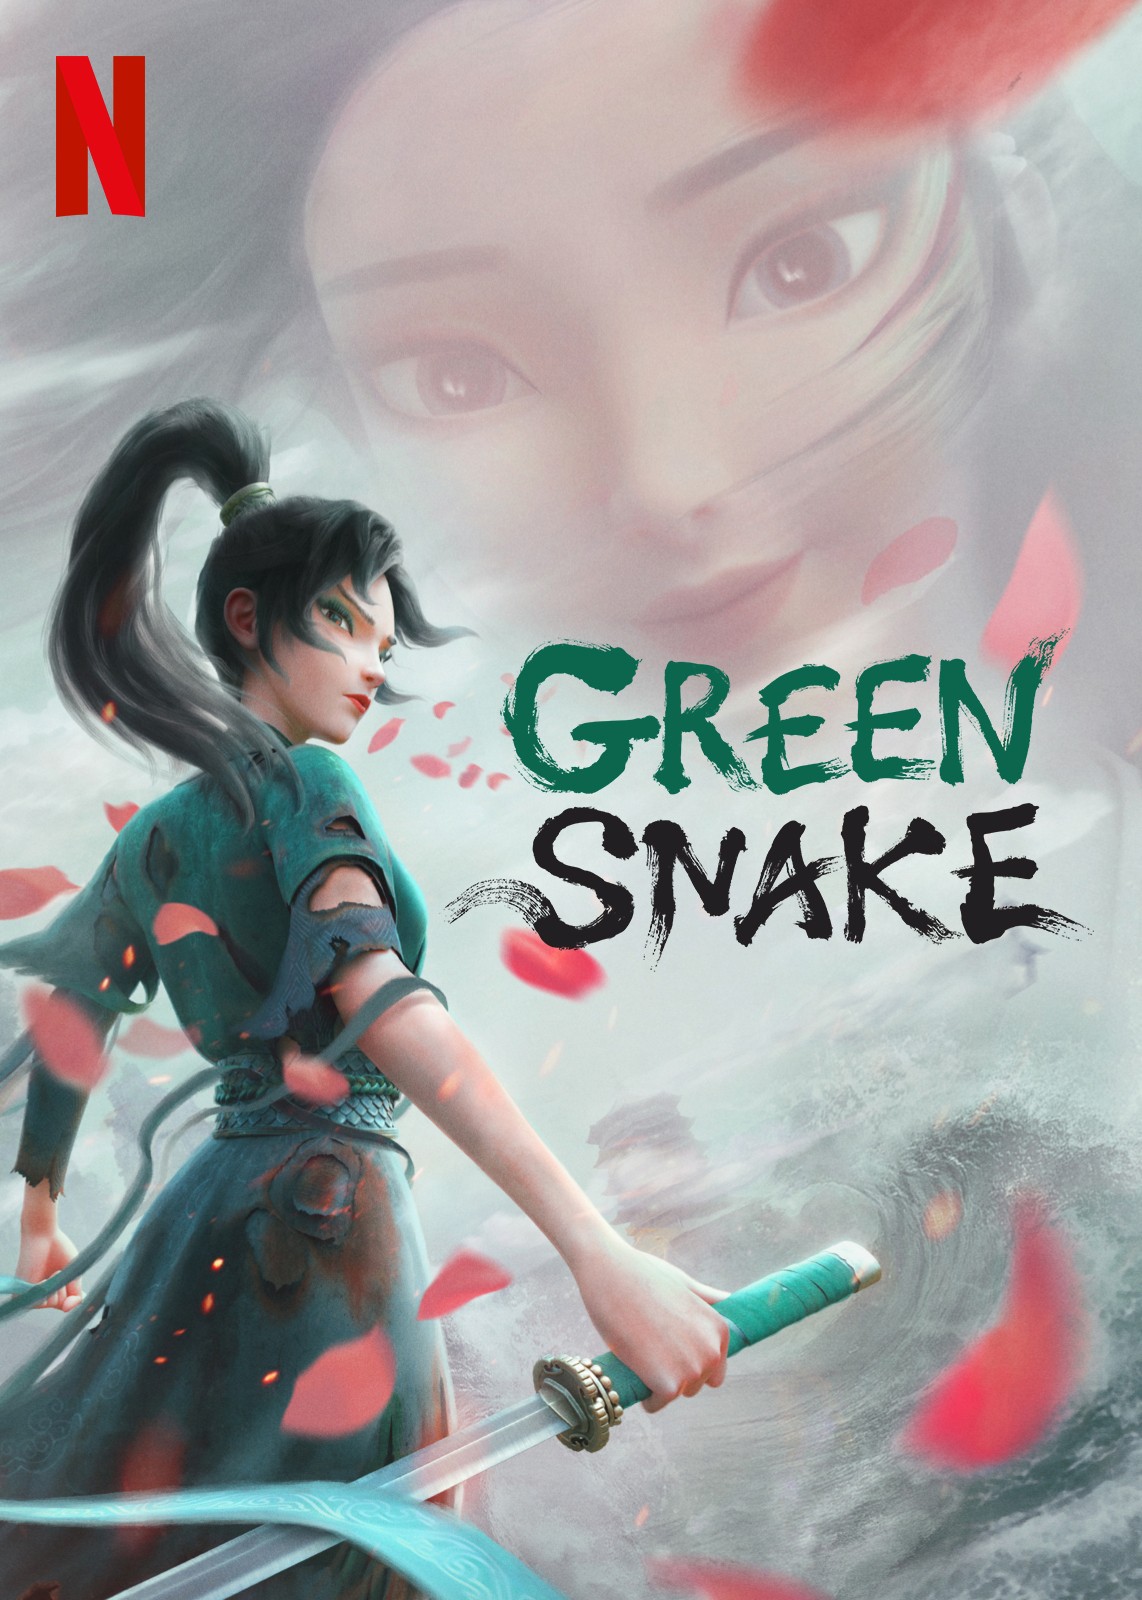  A Serpente Verde estreia na Netflix